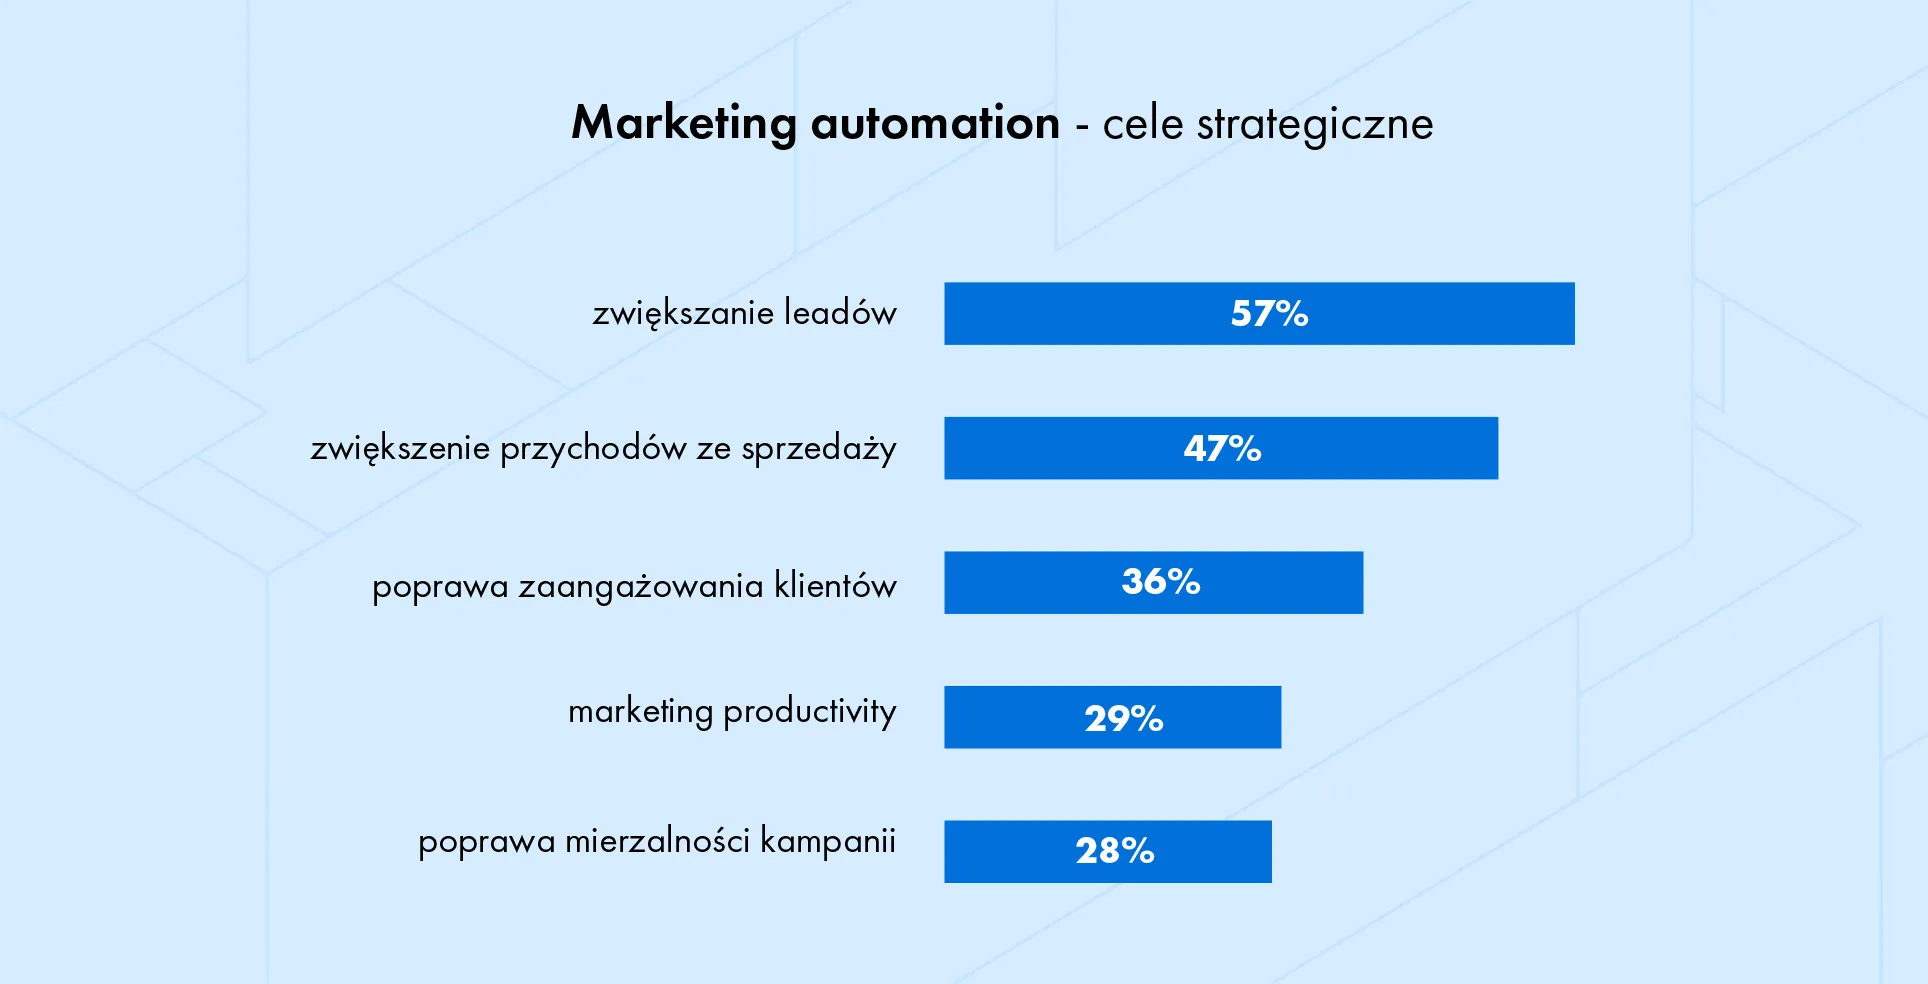 Marketing automation - cele strategiczne